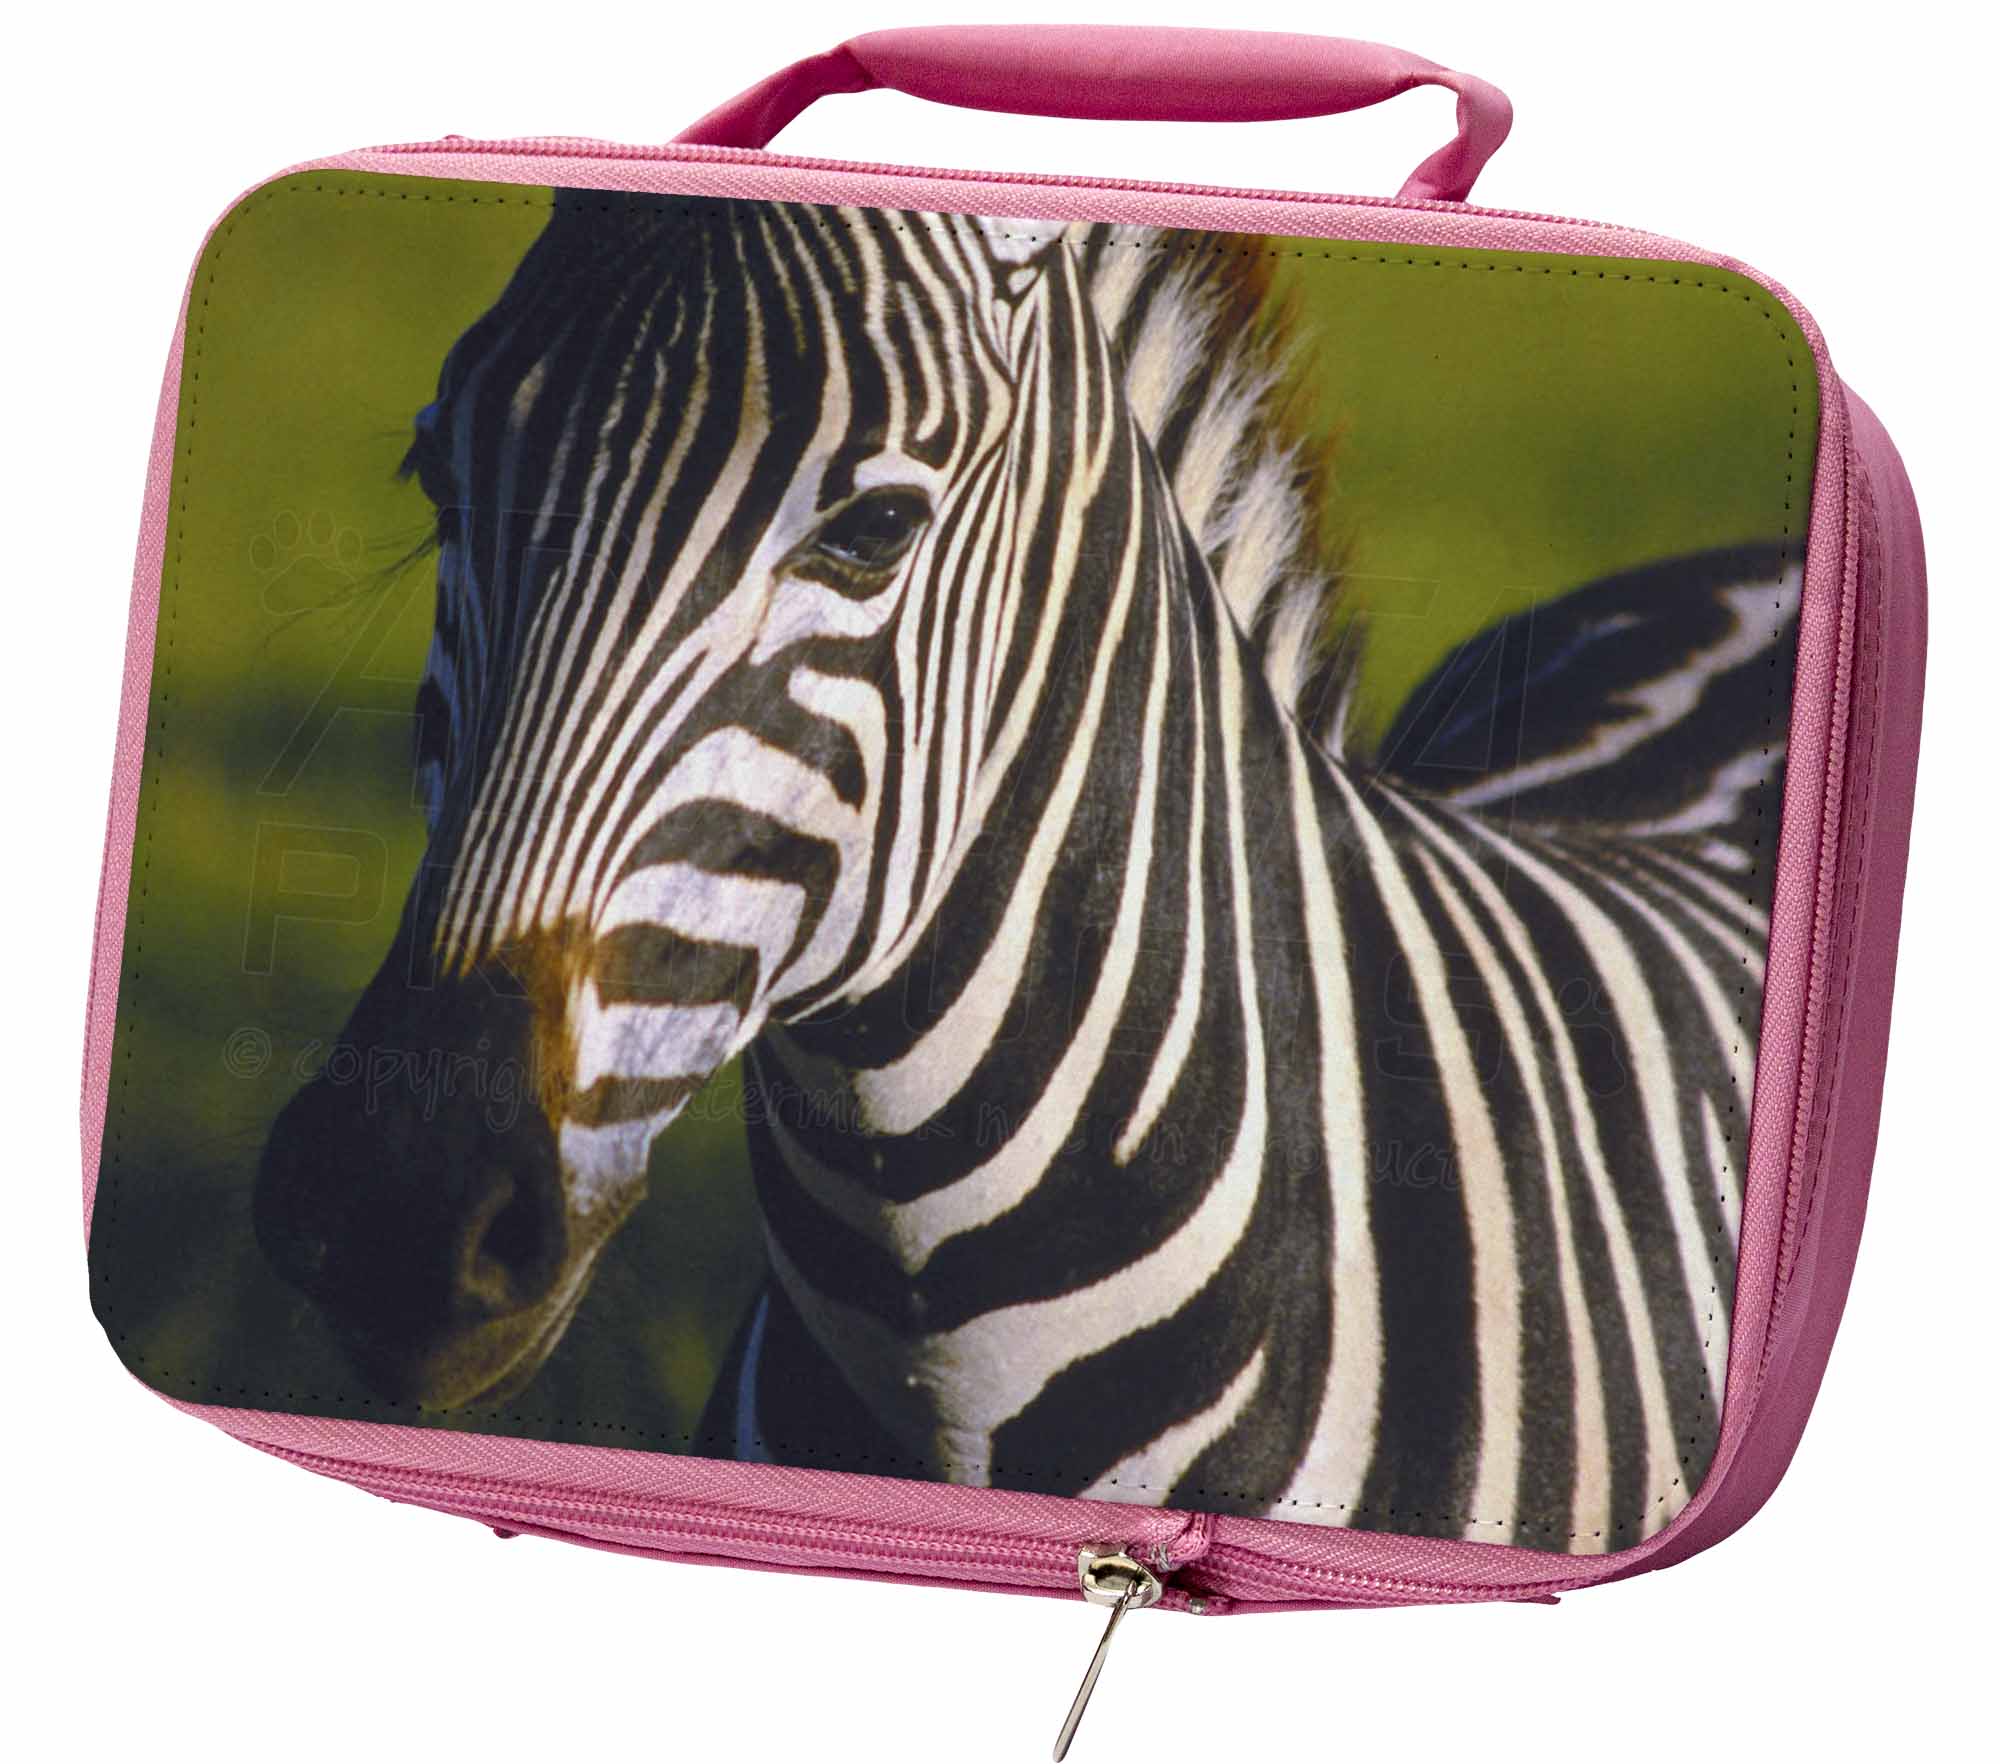 A Pretty Zebra Insulated Pink School Lunch Box Bag, AZ-2LBP | eBay